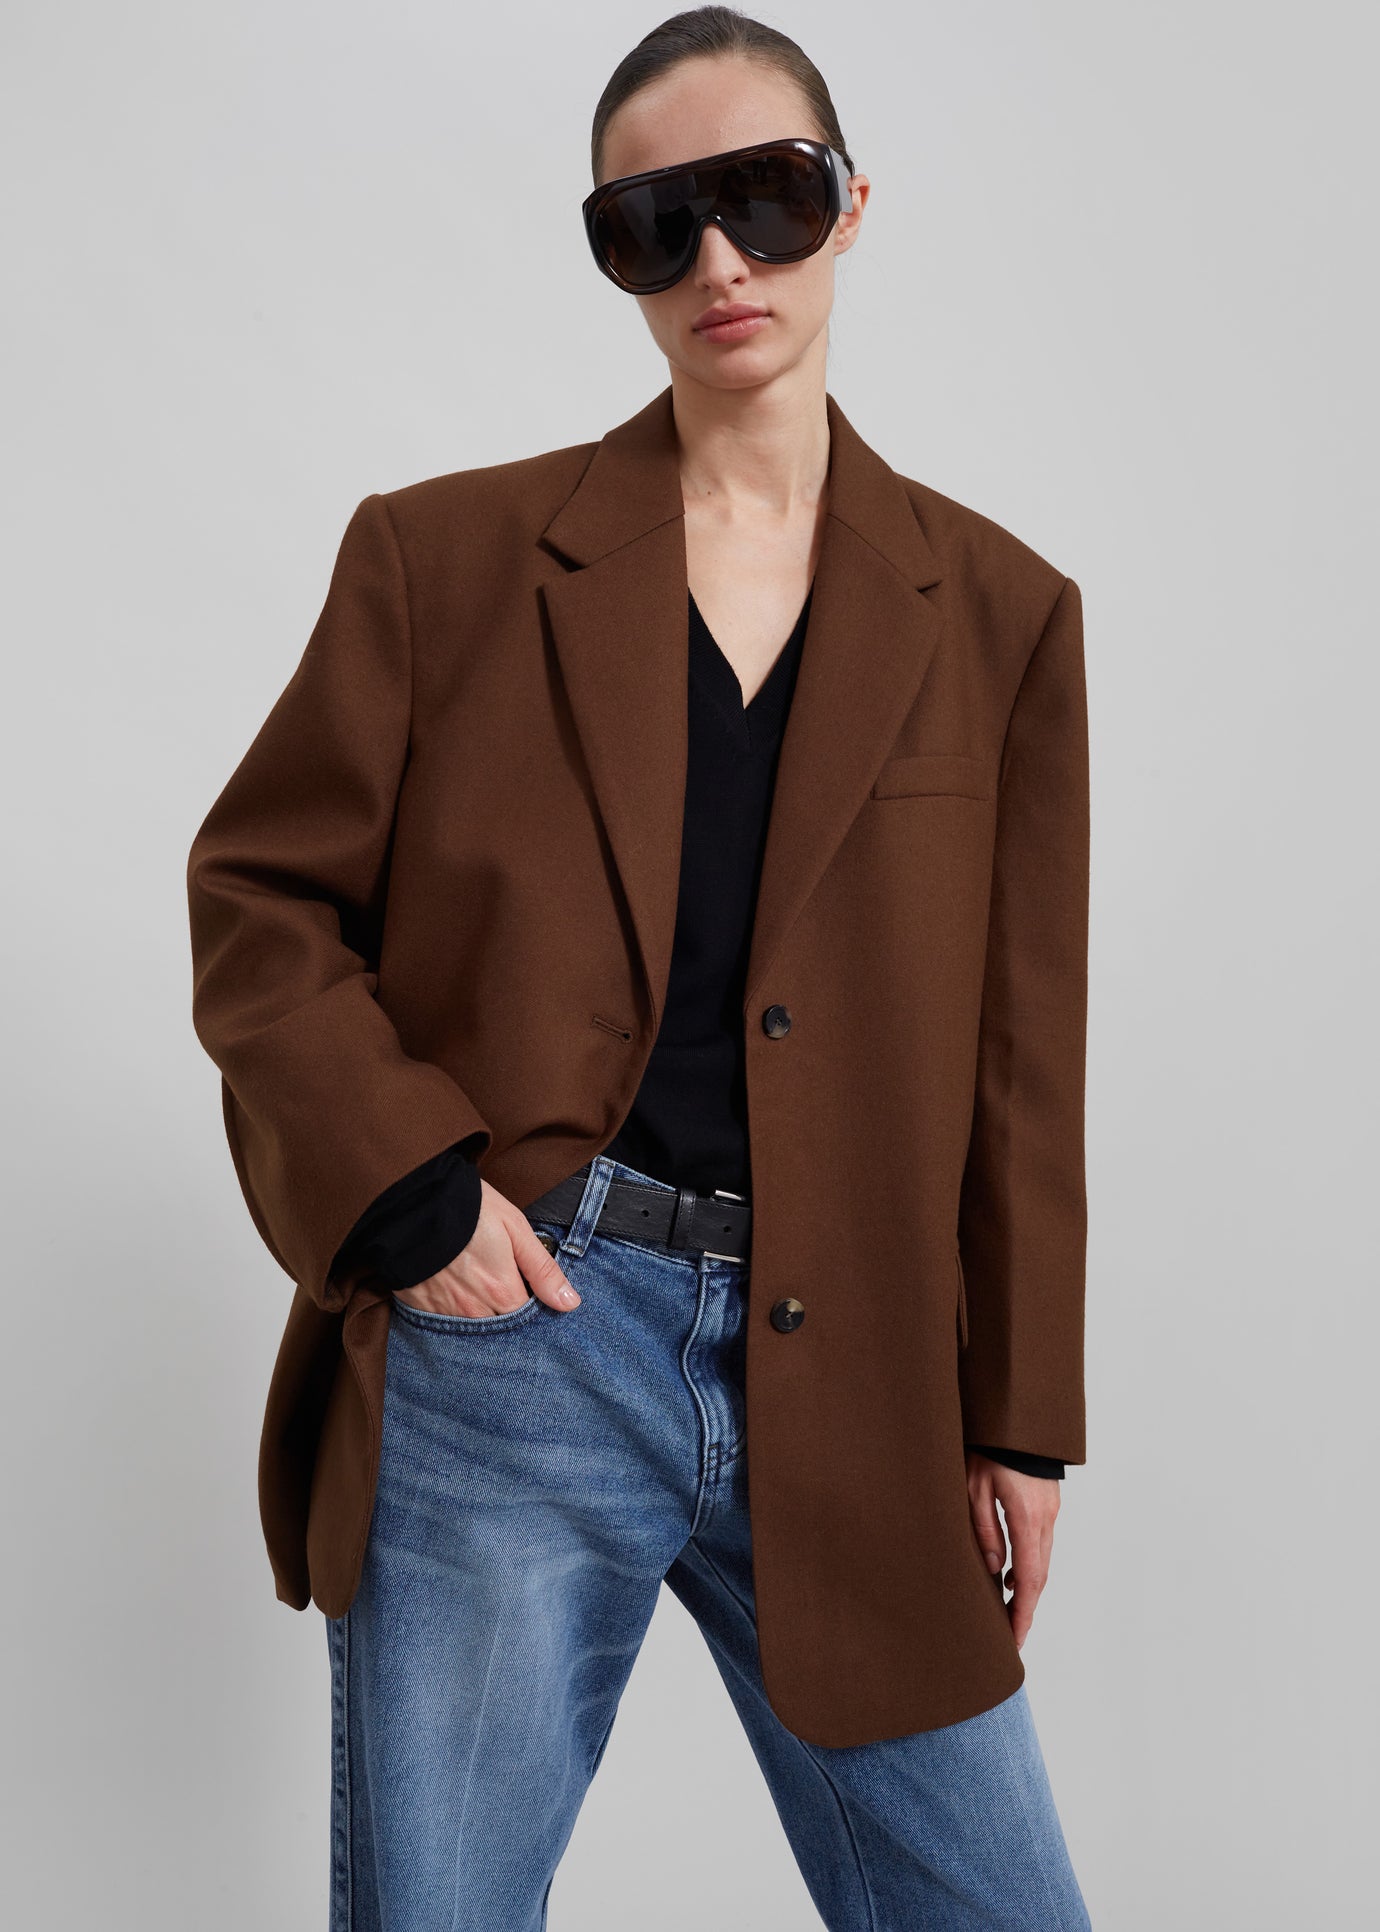 Women's Coats, Jackets, Trench & Blazer – Page 2 – The Frankie Shop